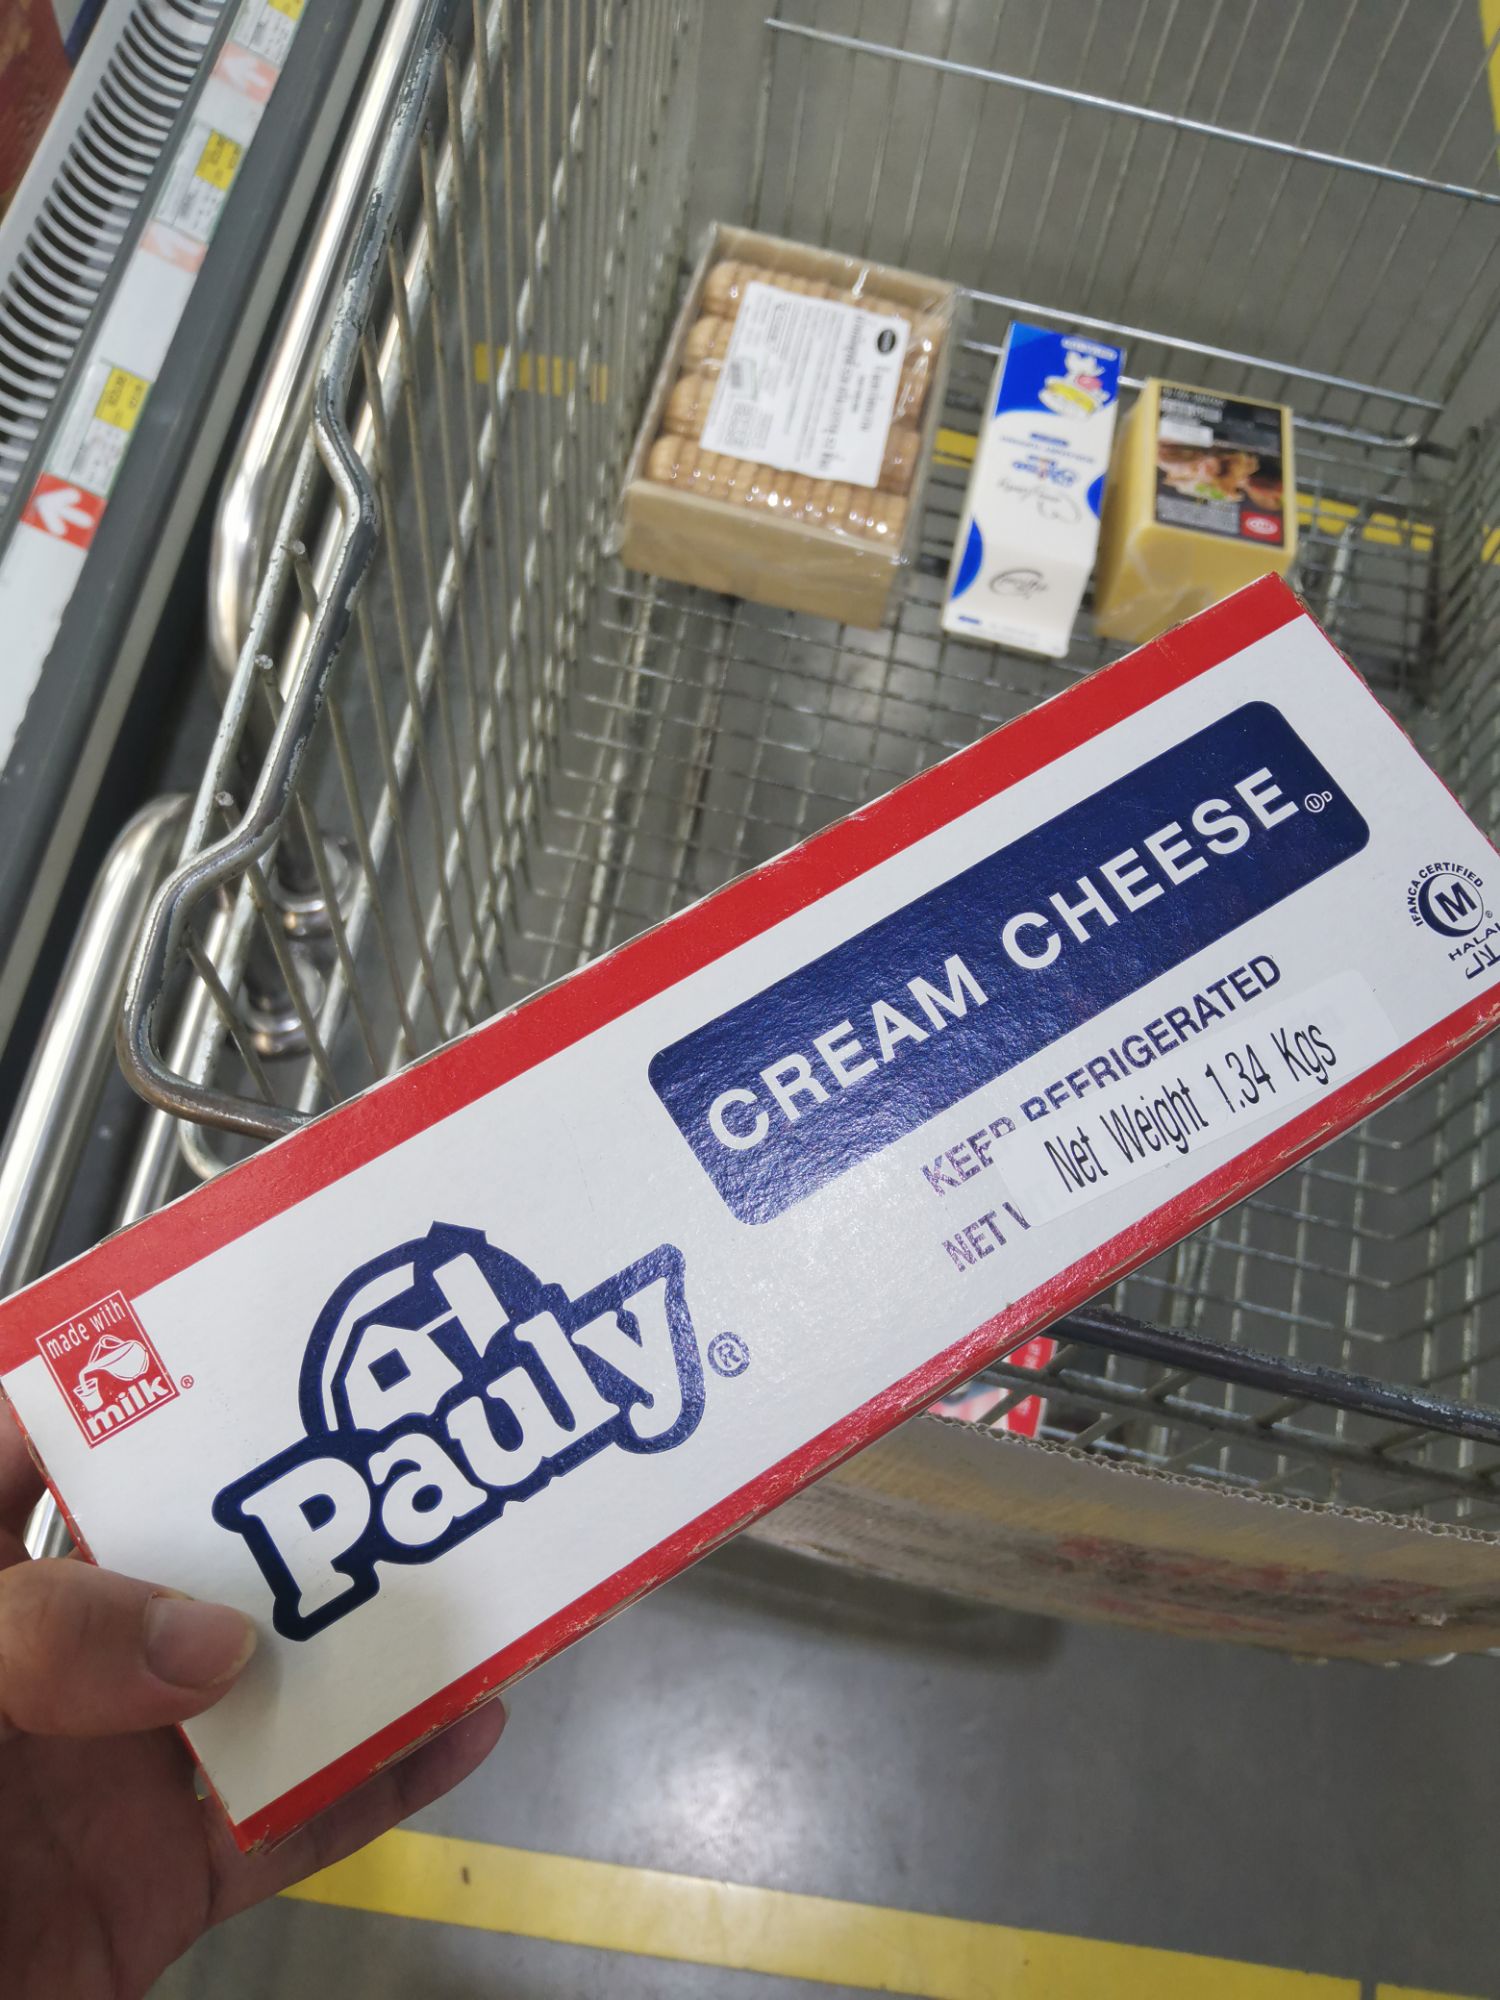 ecook​ พ​าสเจอร์ไรส์​ ครีม​ ชีท​ pauly cream​ cheese​ 1.34kg